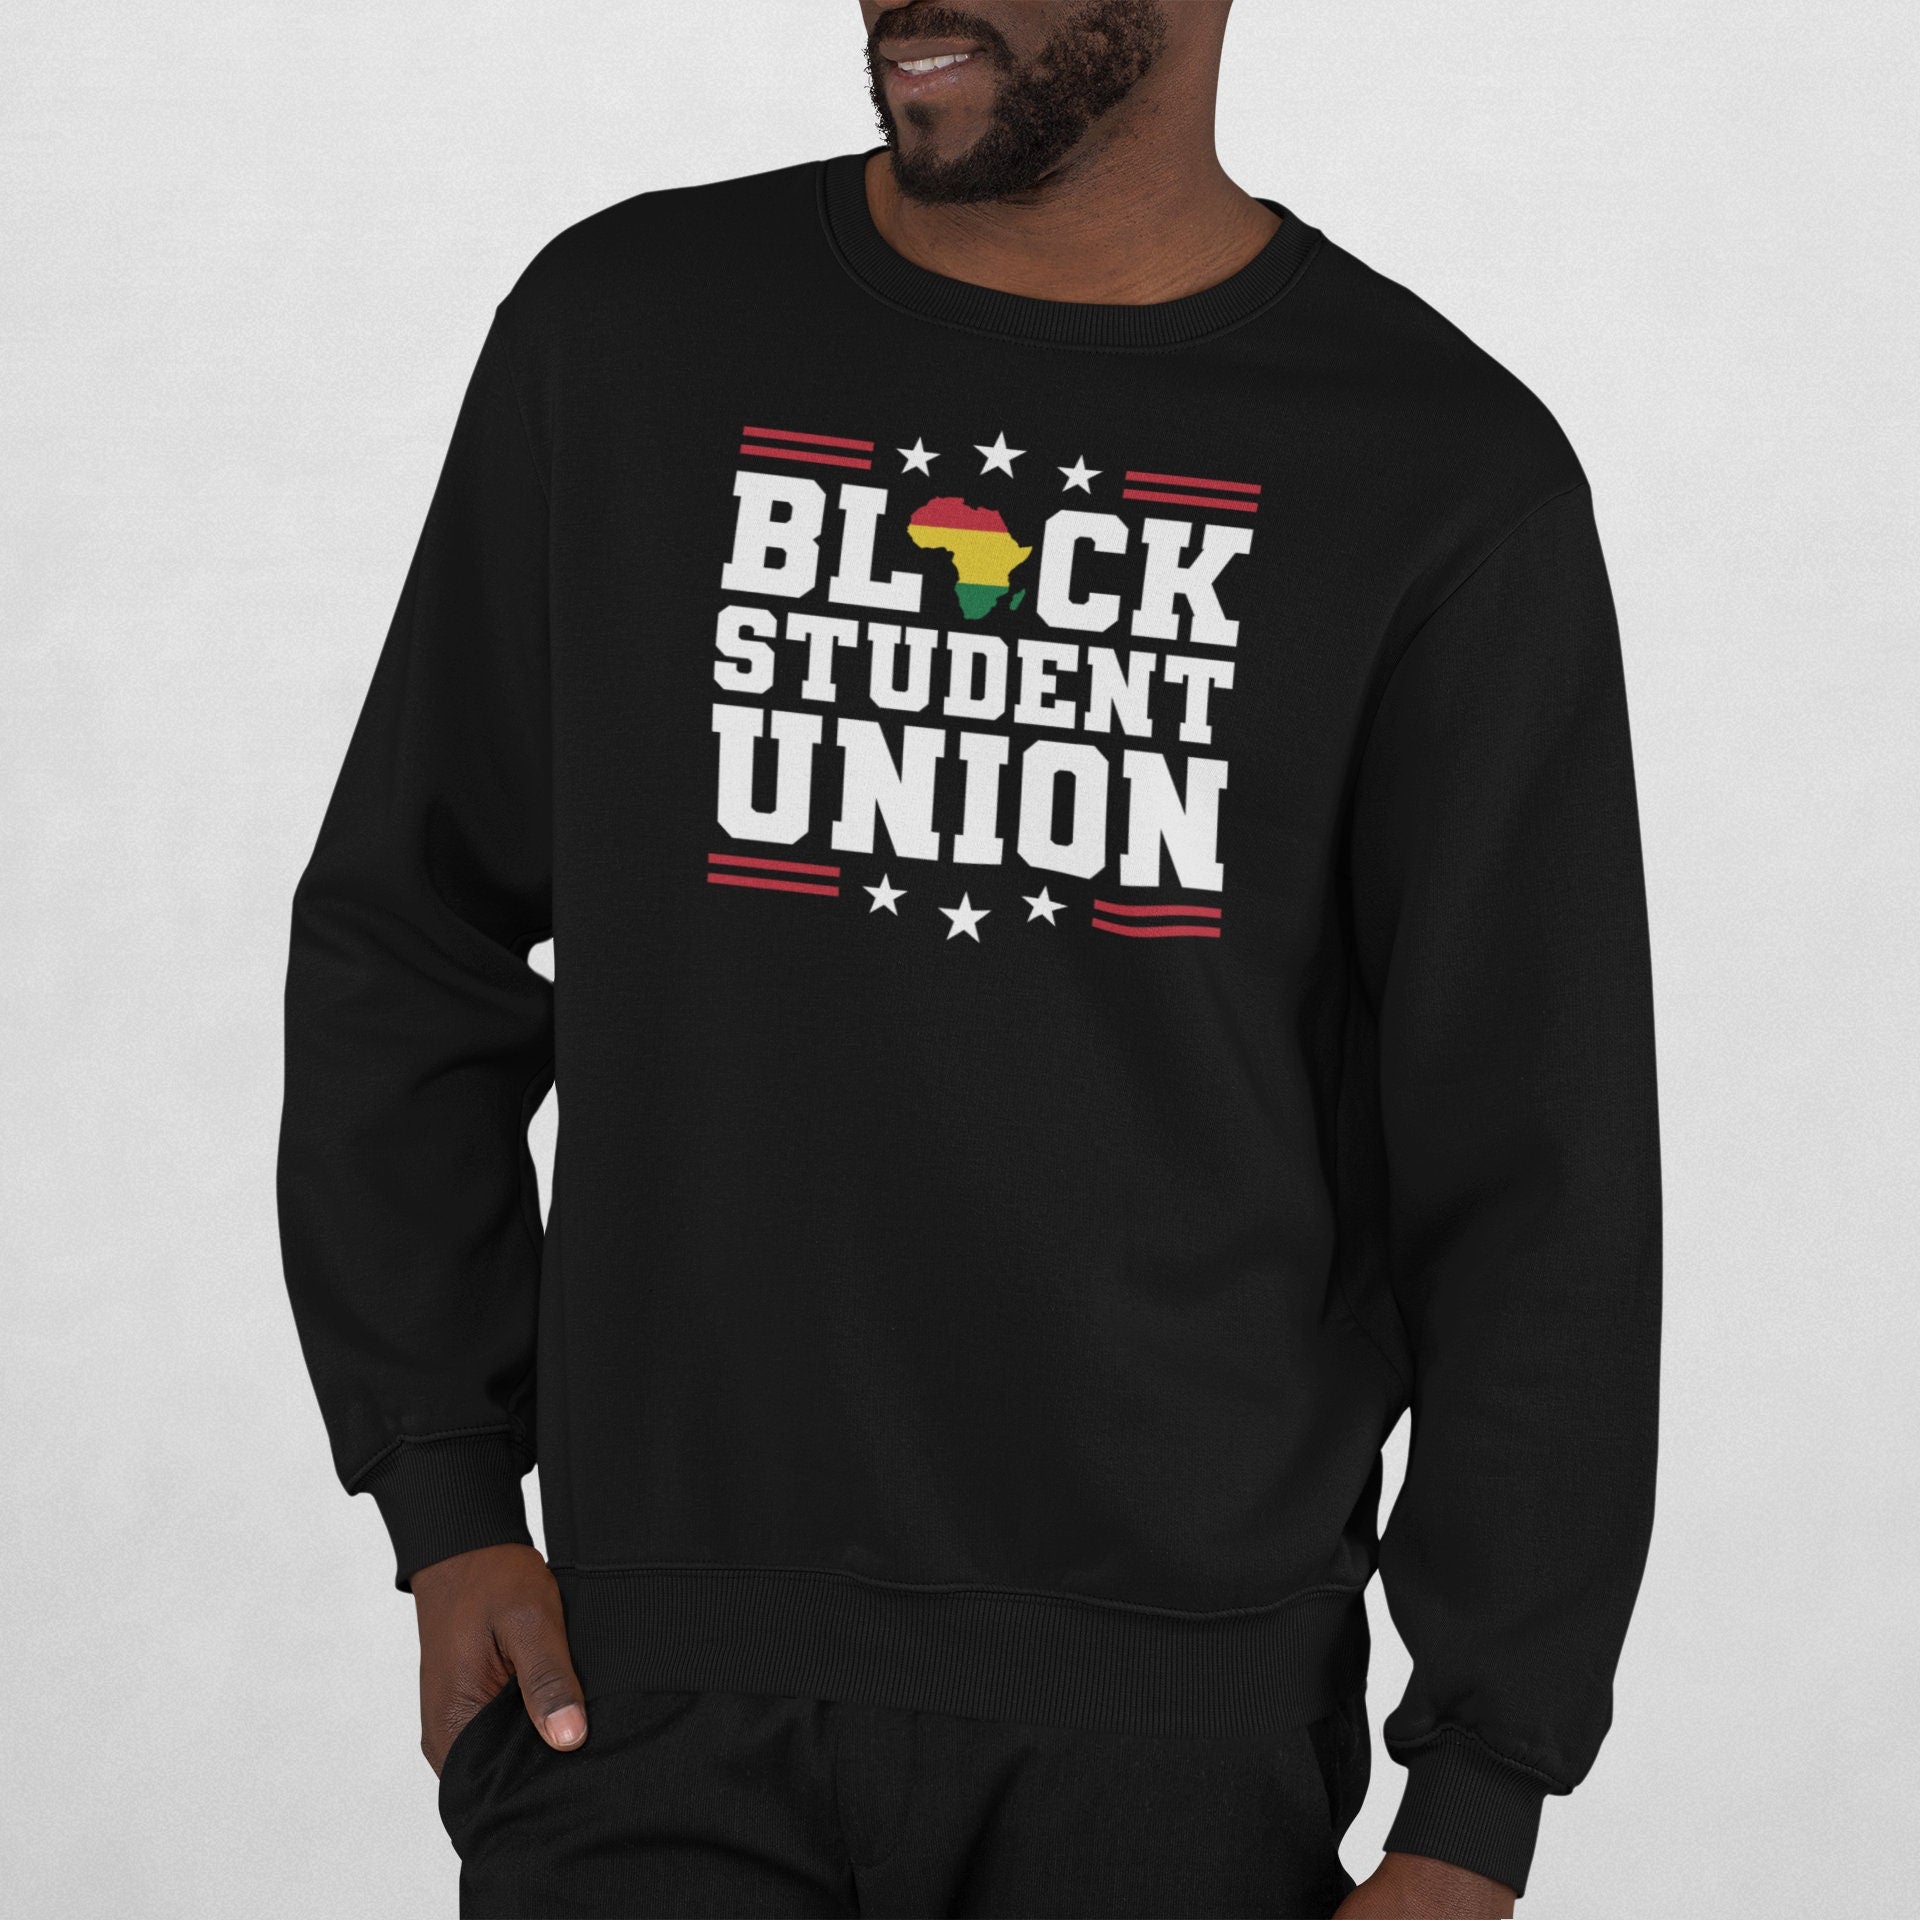 Black Student Union Shirt, Black History Shirt, Black Lives Matter, Black Pride Shirt, I Am Black History